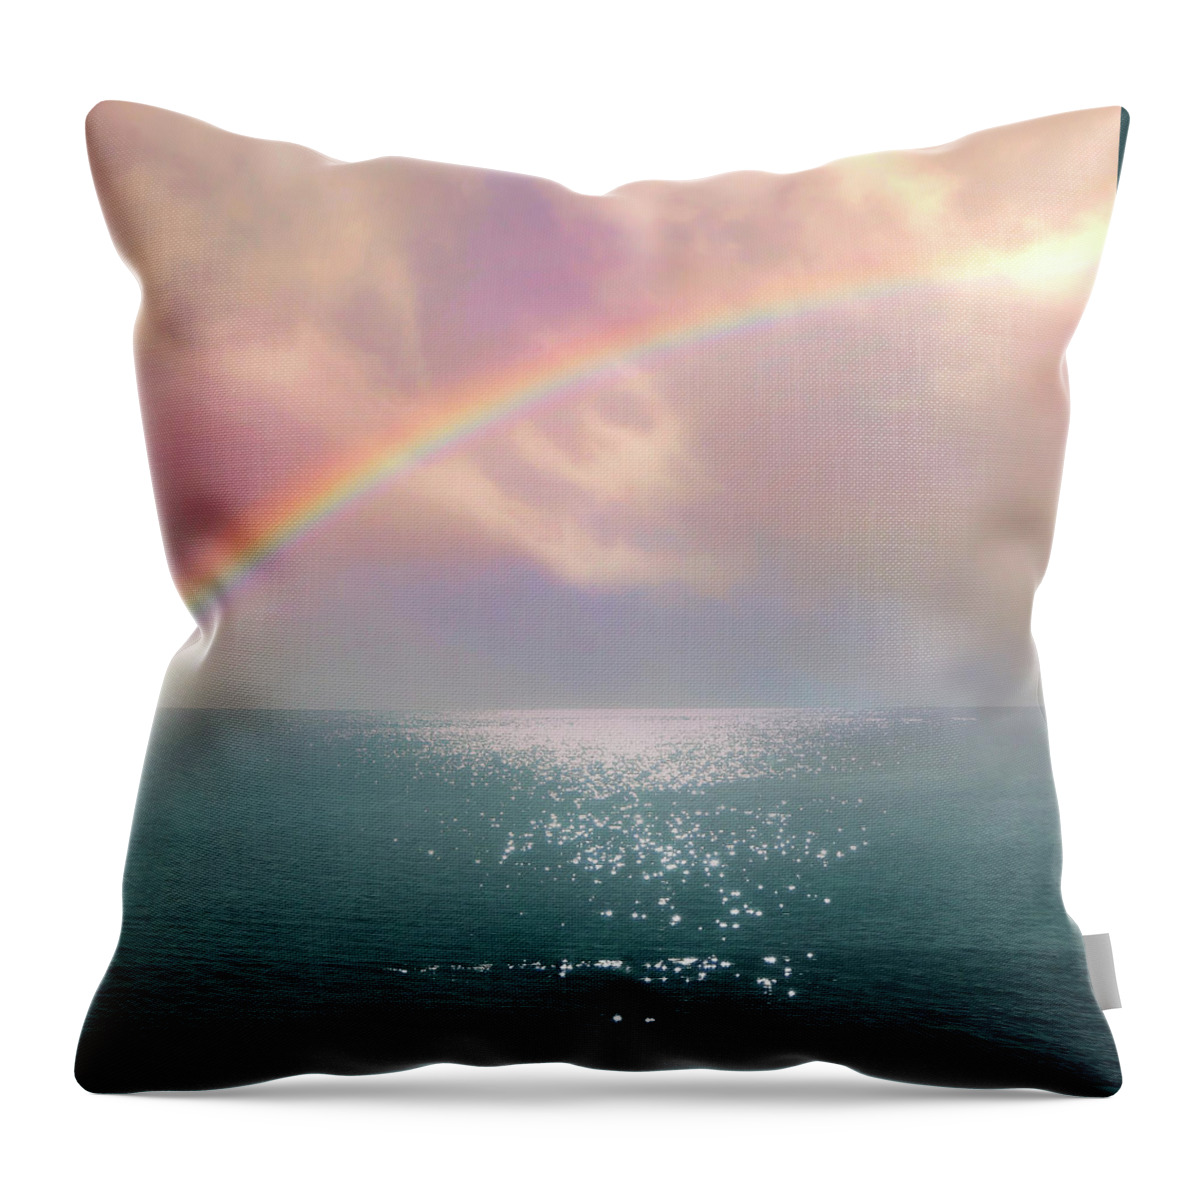 Sea Throw Pillow featuring the mixed media Beautiful Morning In Dreamland With Rainbow by Johanna Hurmerinta